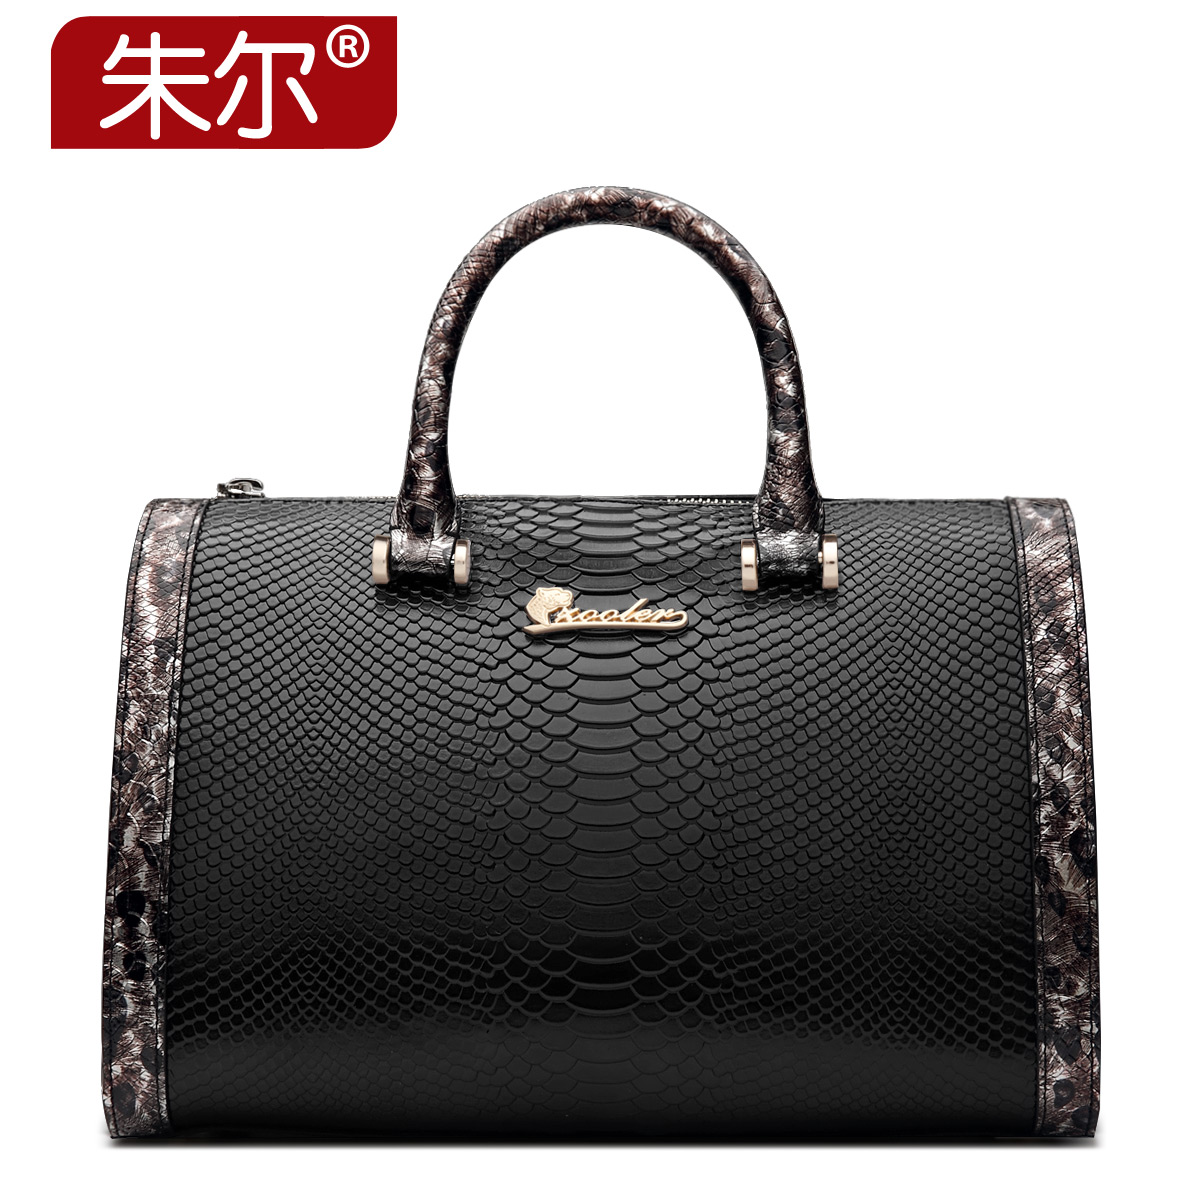 2015 New fashion women messenger bags women leather handbags cross body shoulder genuine leather bag bolsas femininas